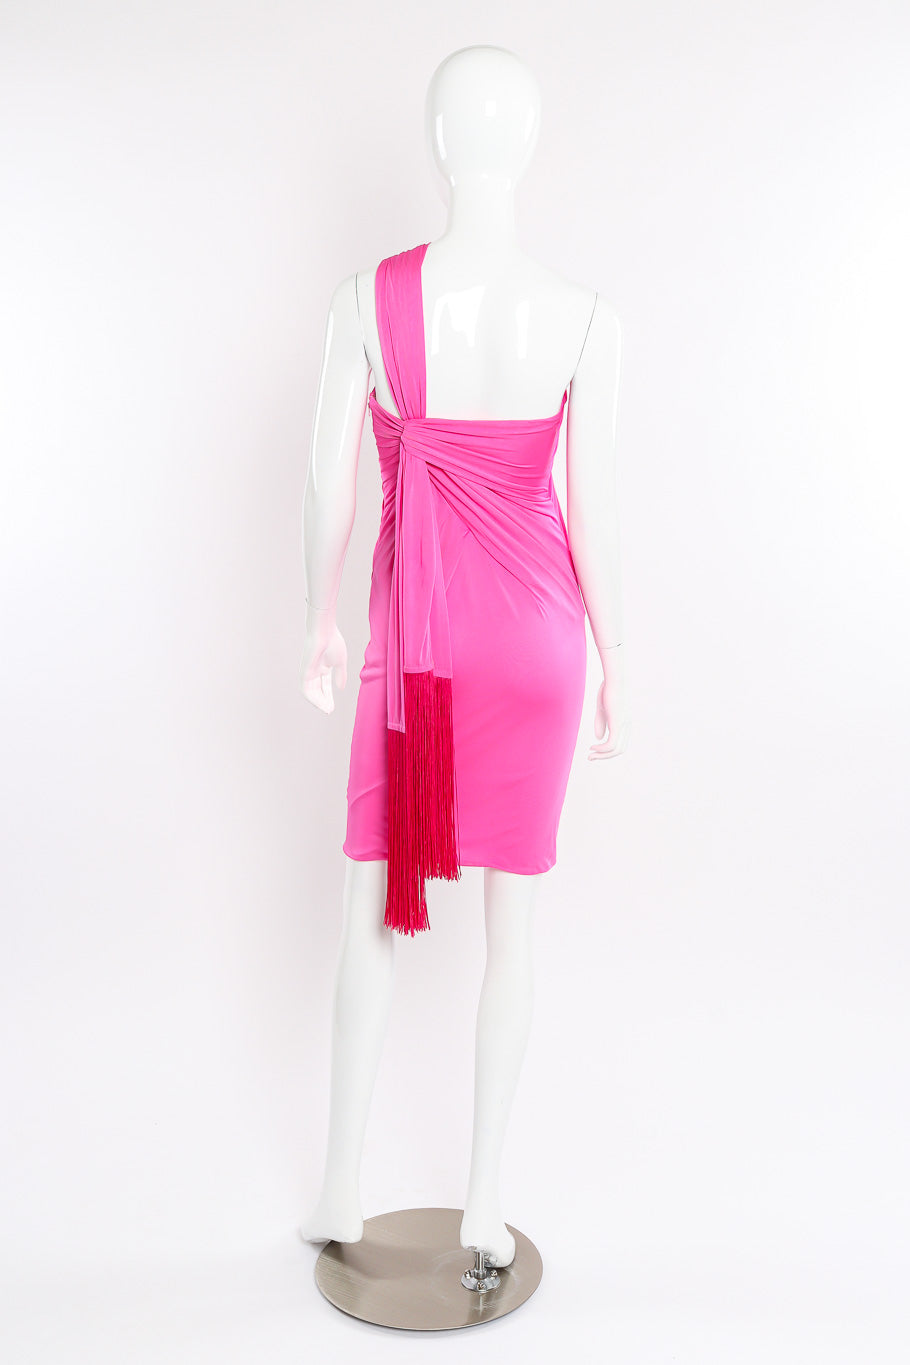 Versace Ruche One-Shoulder Dress back view on mannequin @Recessla